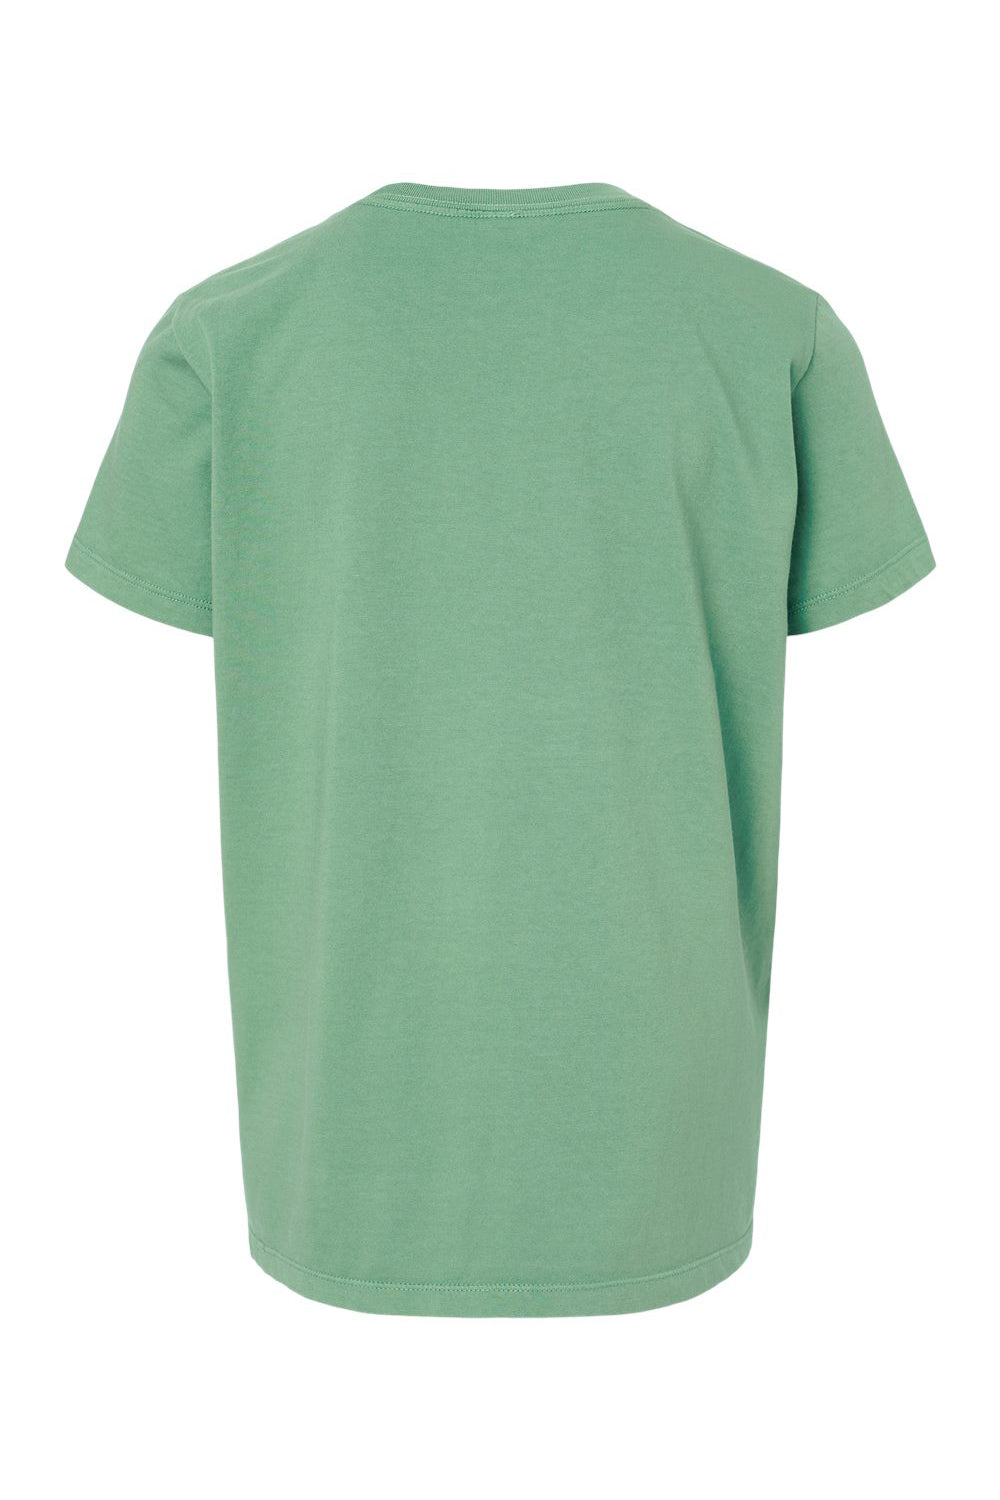 SoftShirts 402 Youth Organic Short Sleeve Crewneck T-Shirt Pine Green Flat Back